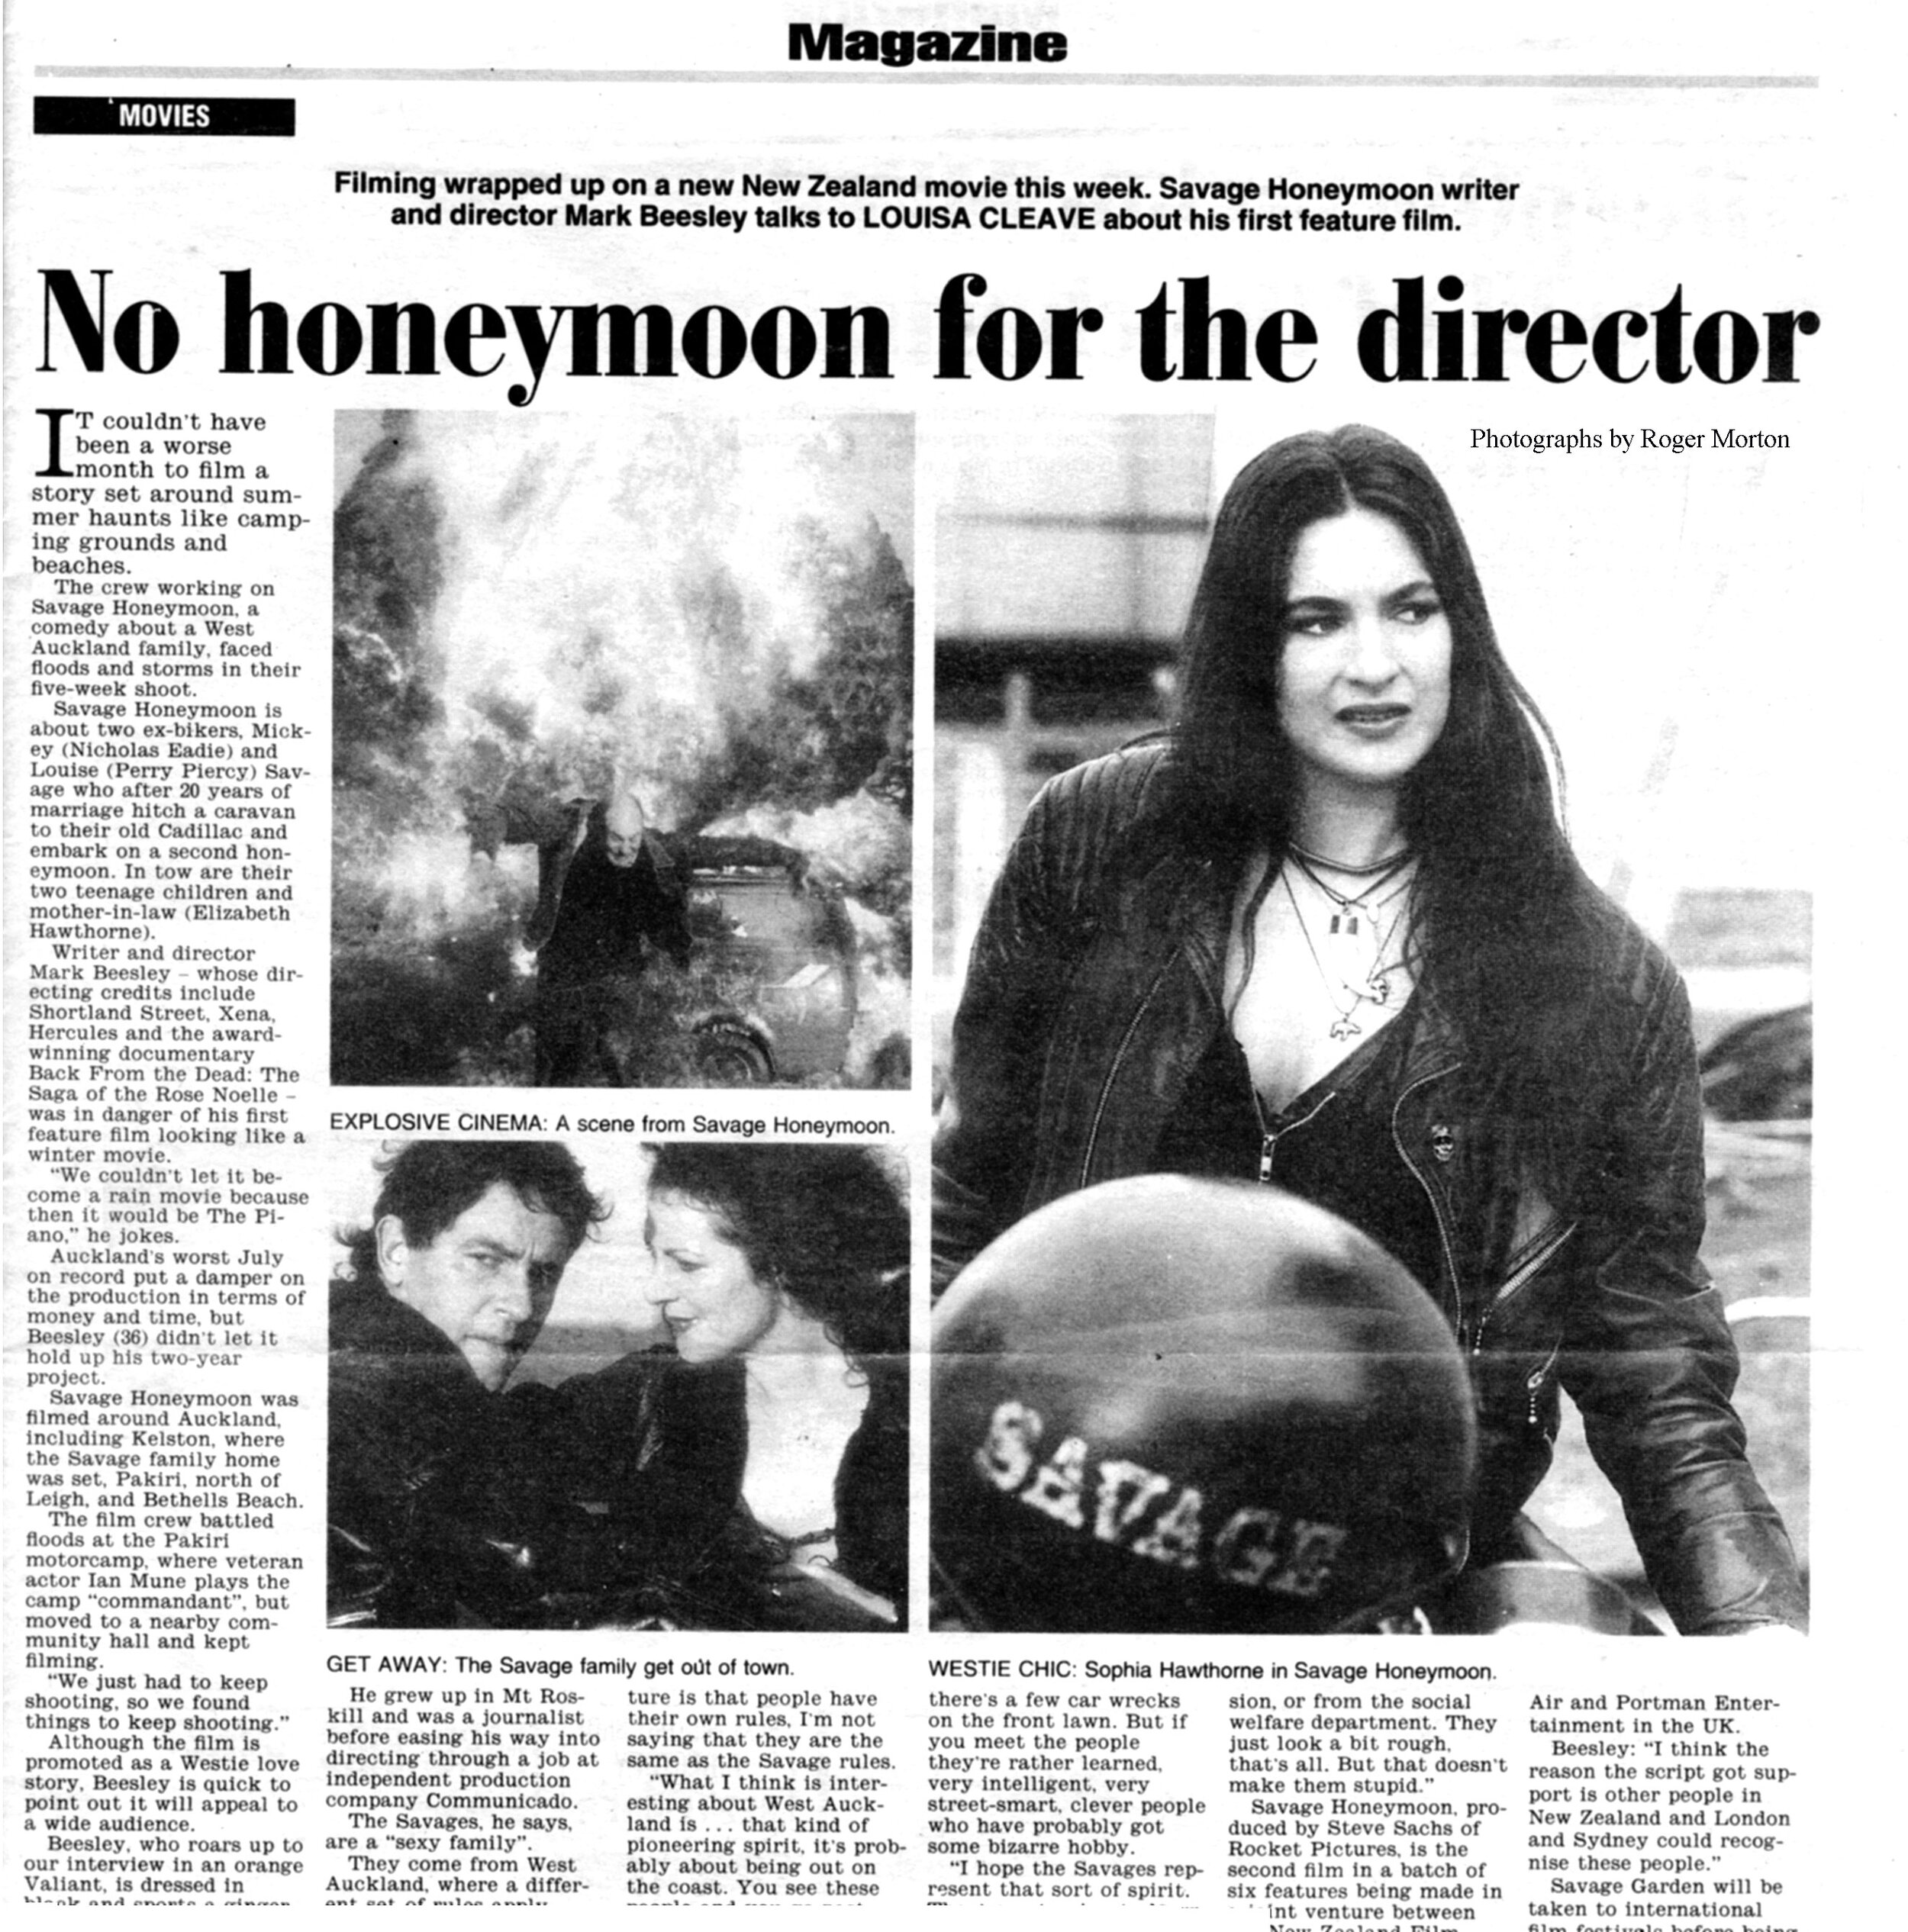 Savage Honeymoon, a New Zealand film.